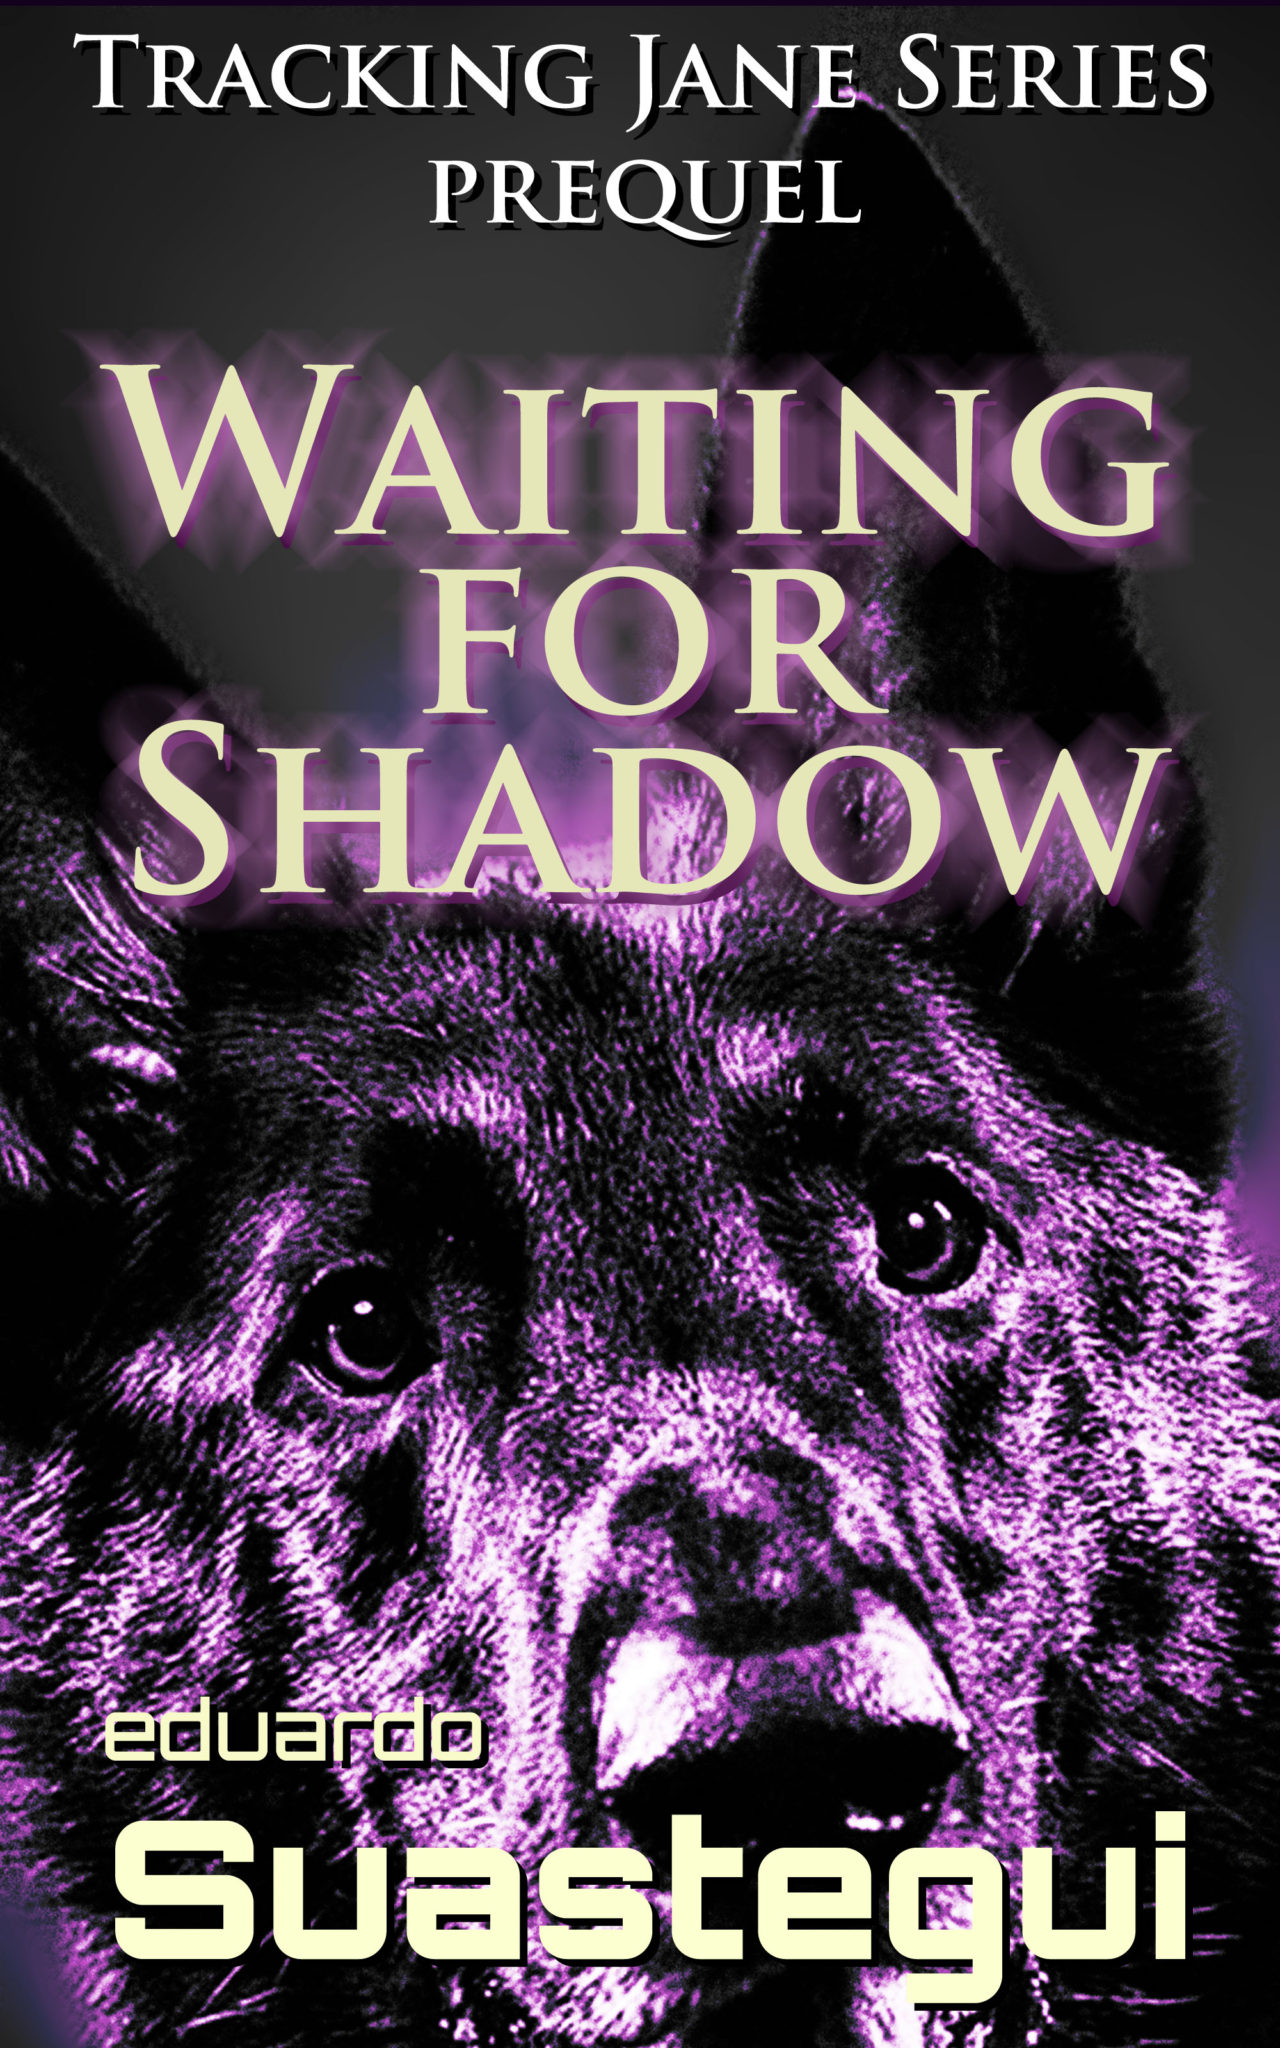 Waiting for Shadow by Eduardo Suastegui